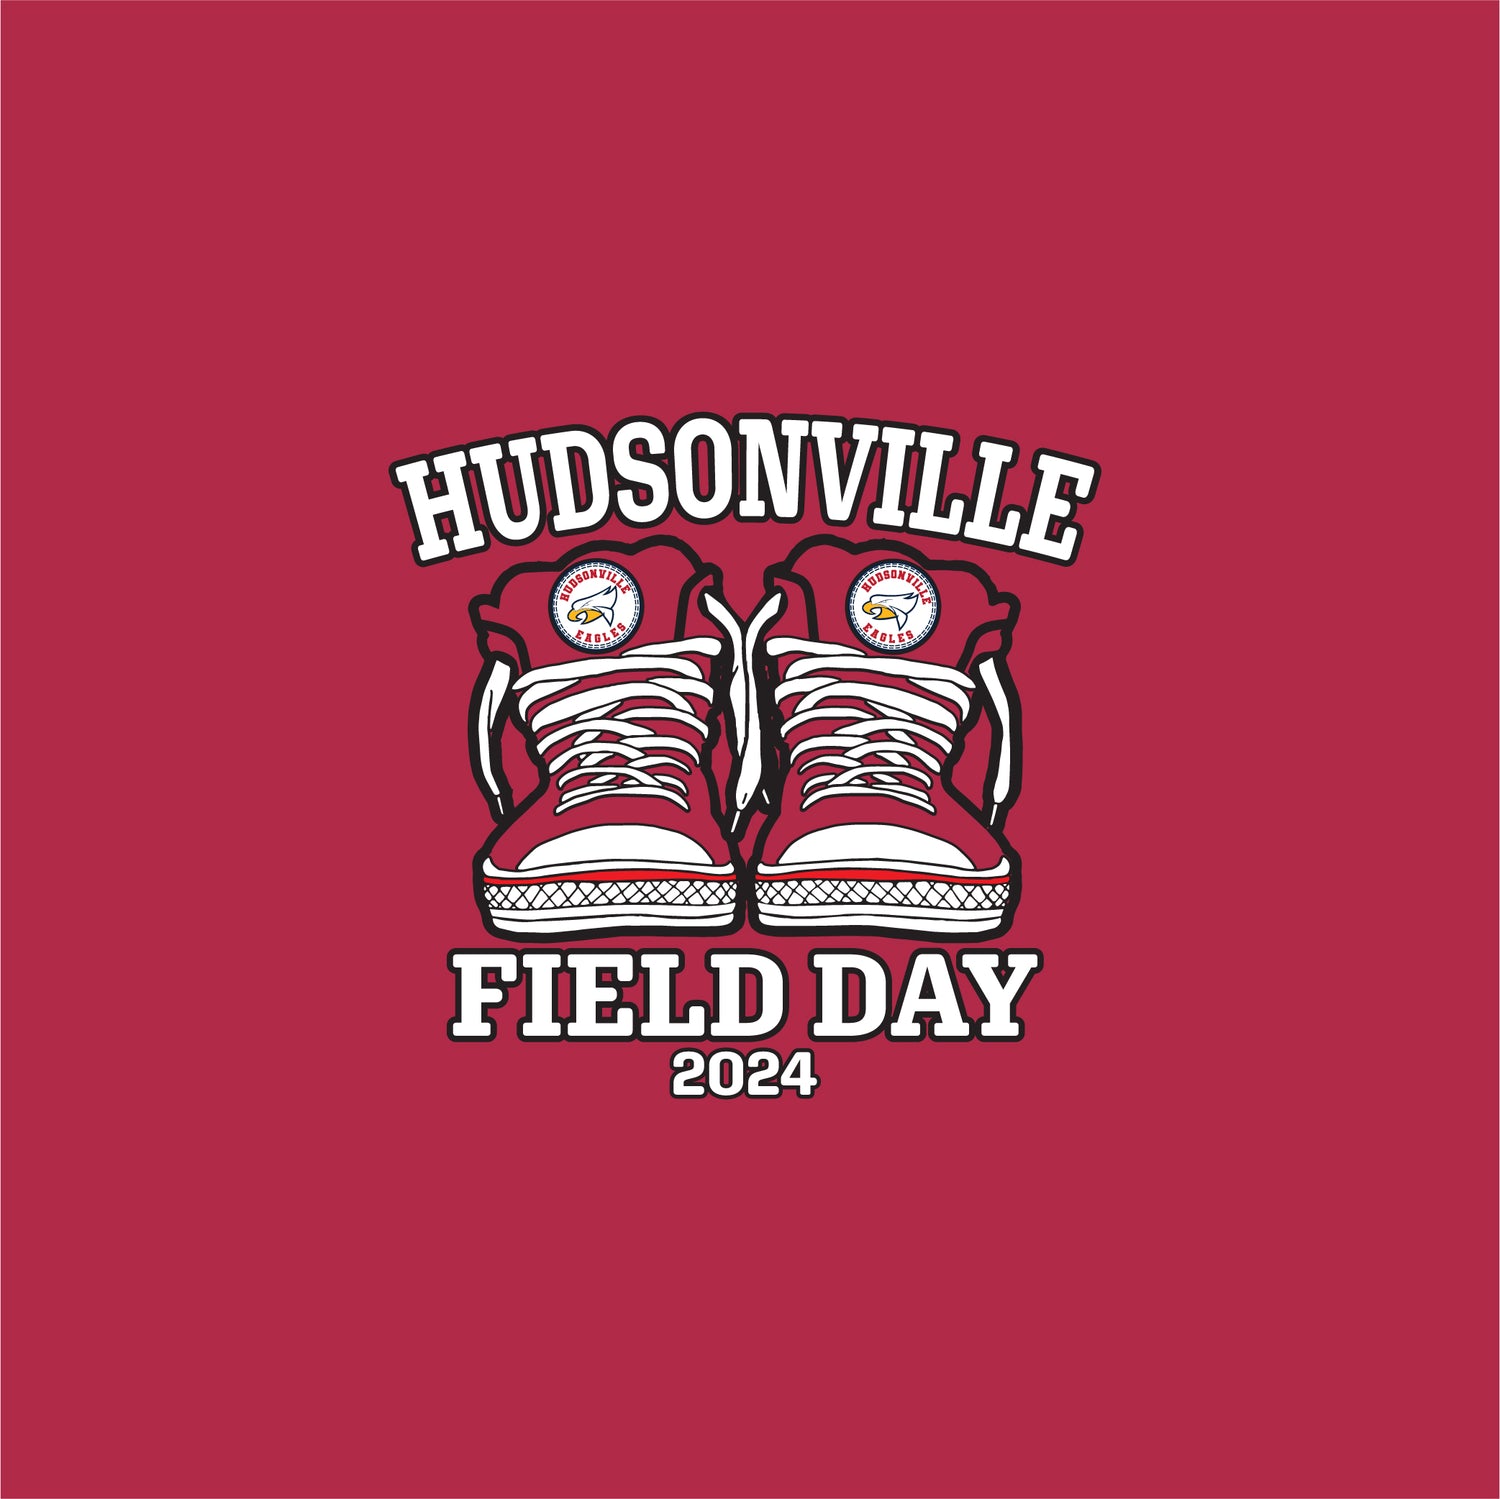 Hudsonville Field Day 2024